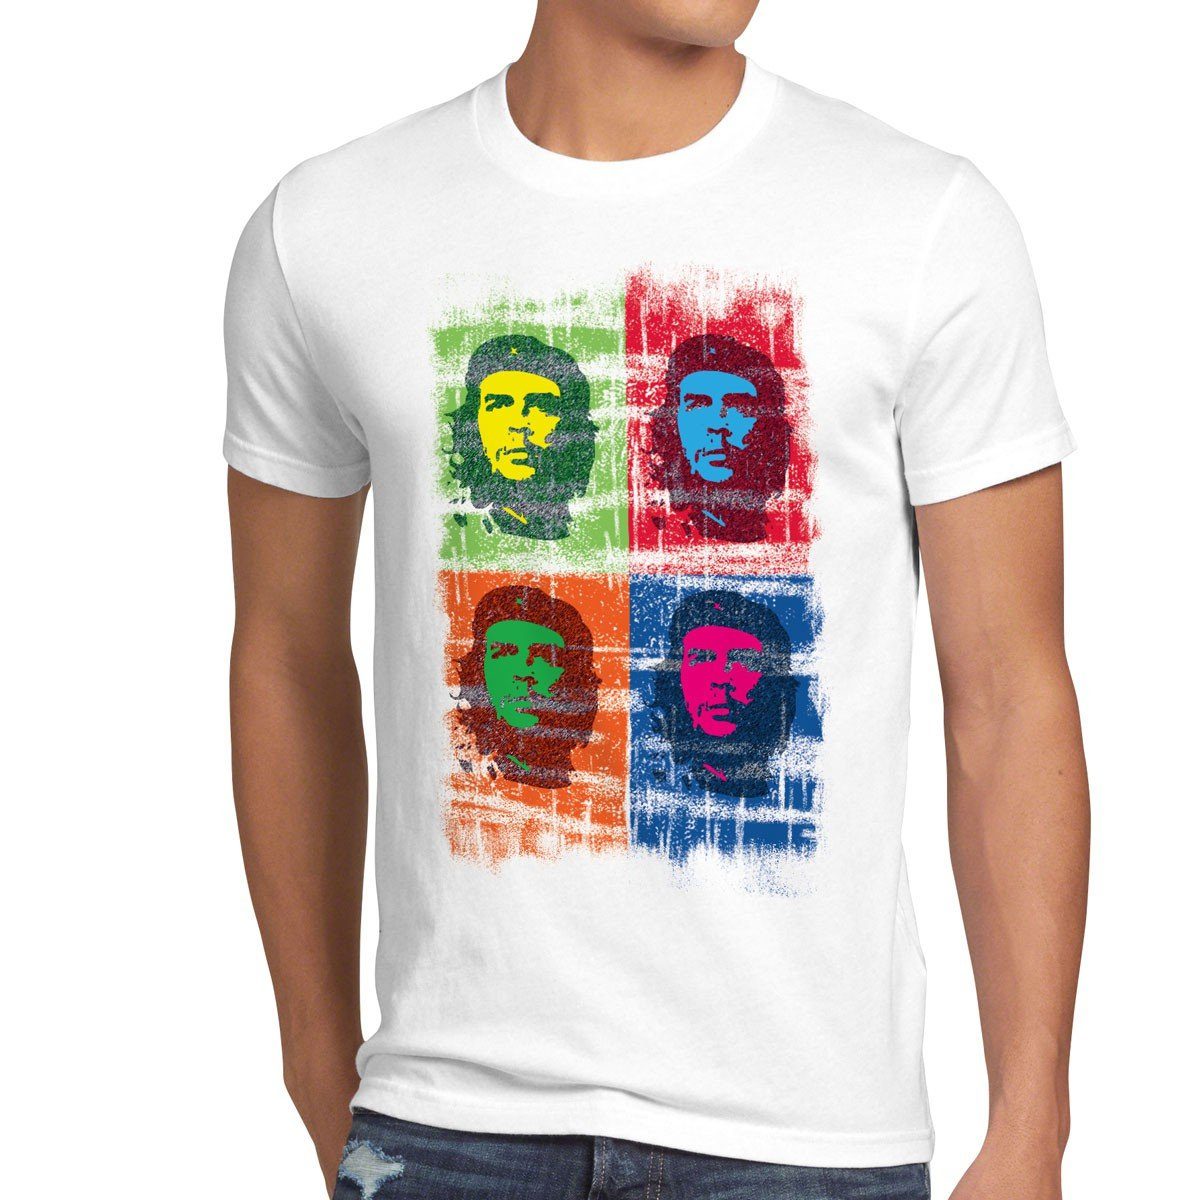 style3 Print-Shirt Herren T-Shirt andy castro weiß kuba warhol pop Guevara viva revolution Che fidel art